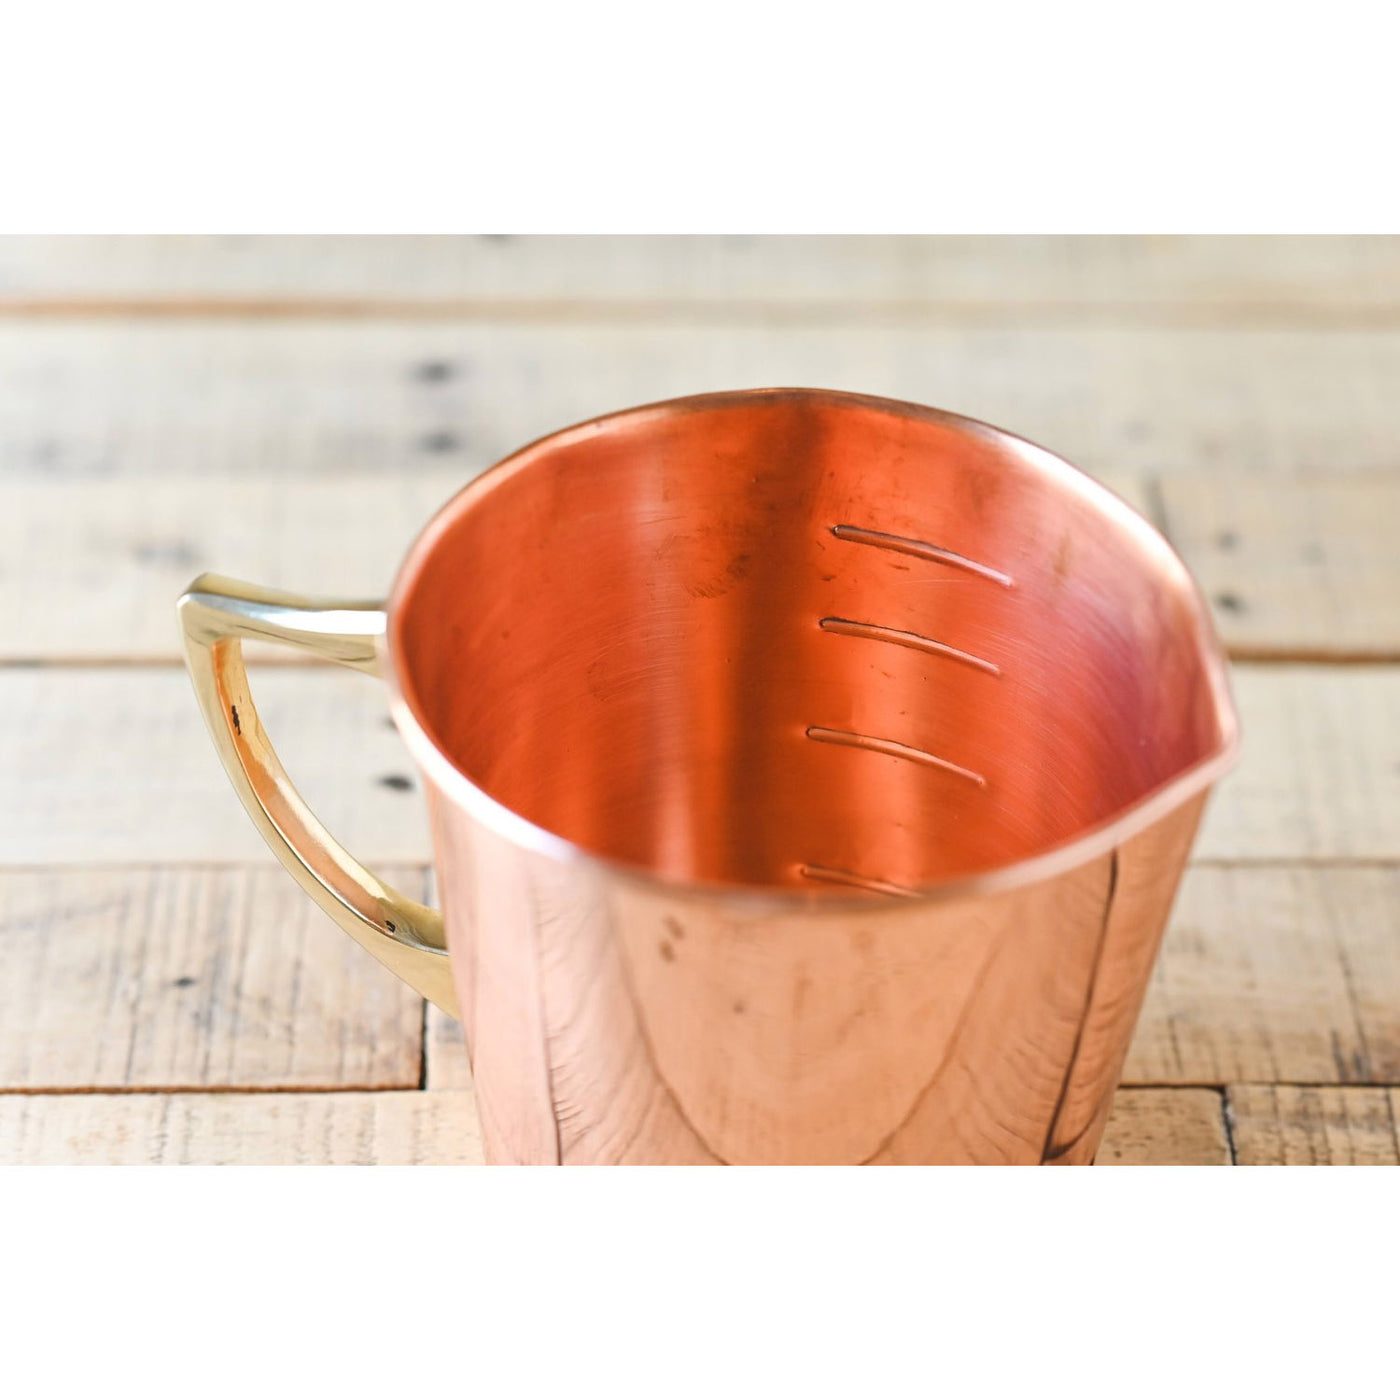 4 Cup Copper Measuring Cup